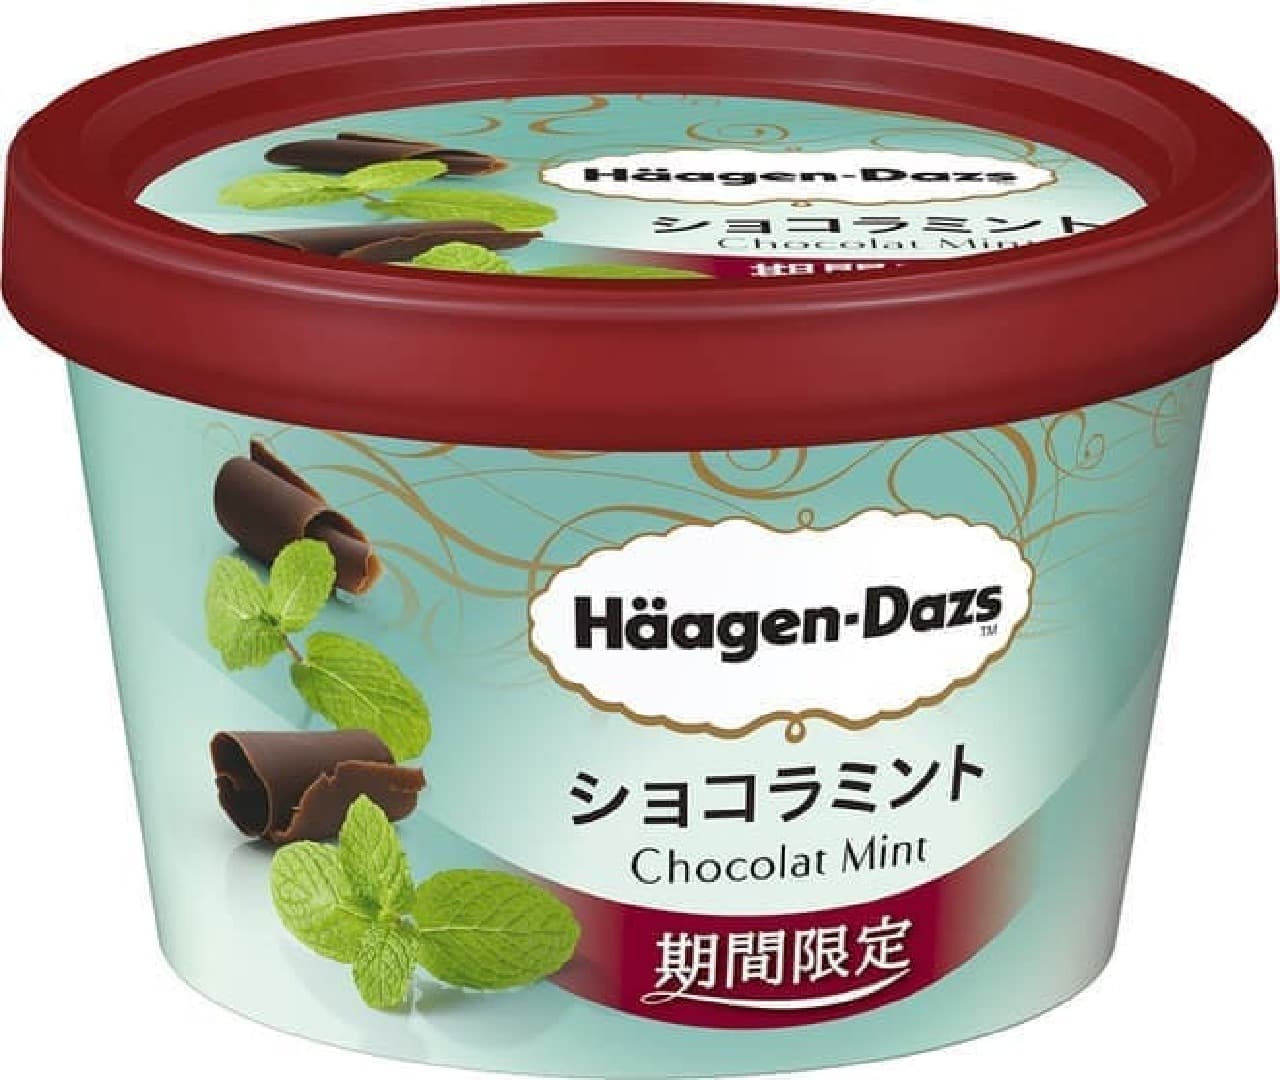 Haagen-Dazs Chocolat Mint